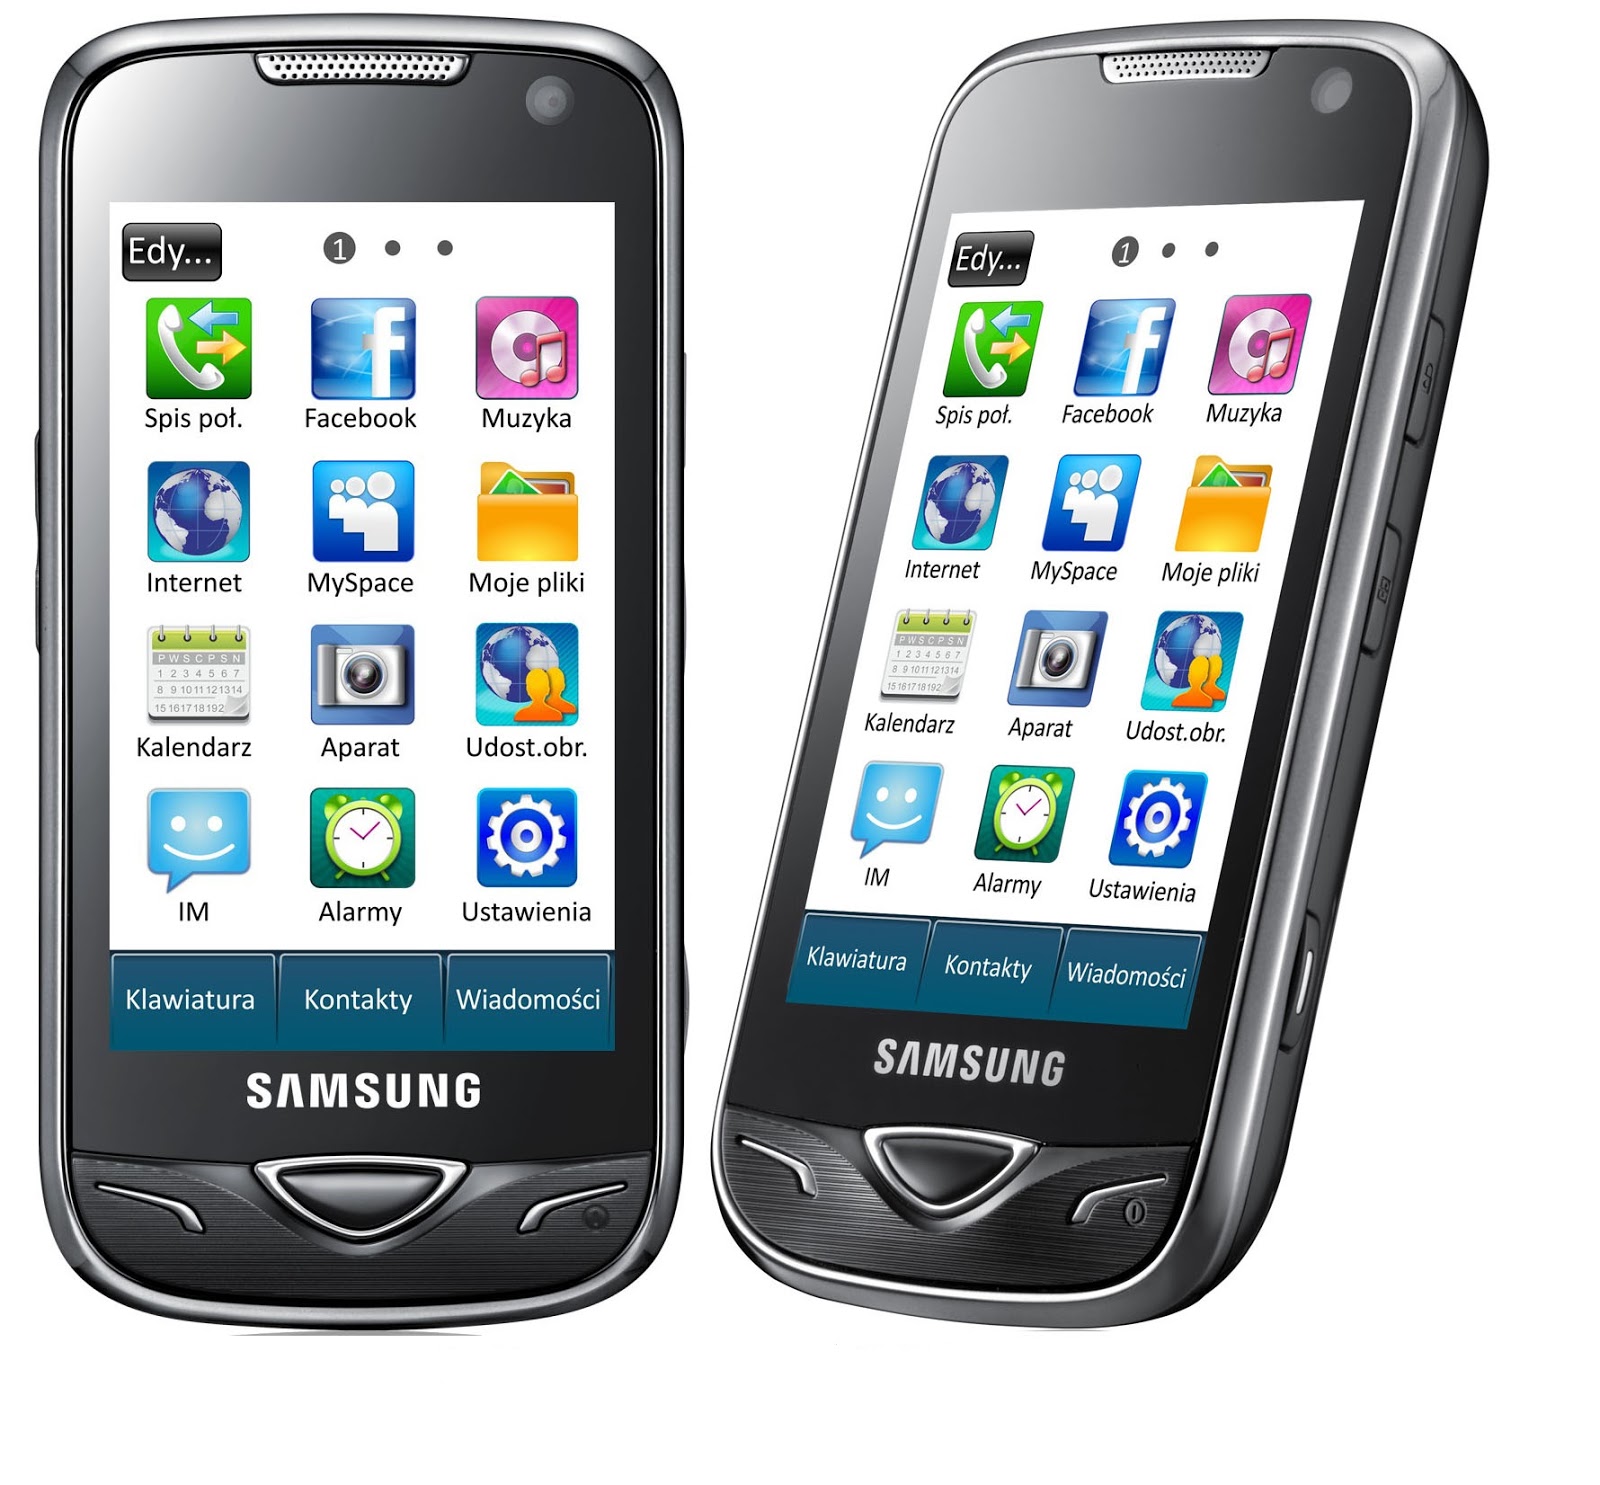 Модели смартфонов самсунг 2020. Samsung s5300 Galaxy Pocket. Samsung mobile 2020. Самсунги 2020г. Смартфоны самсунг 2020.